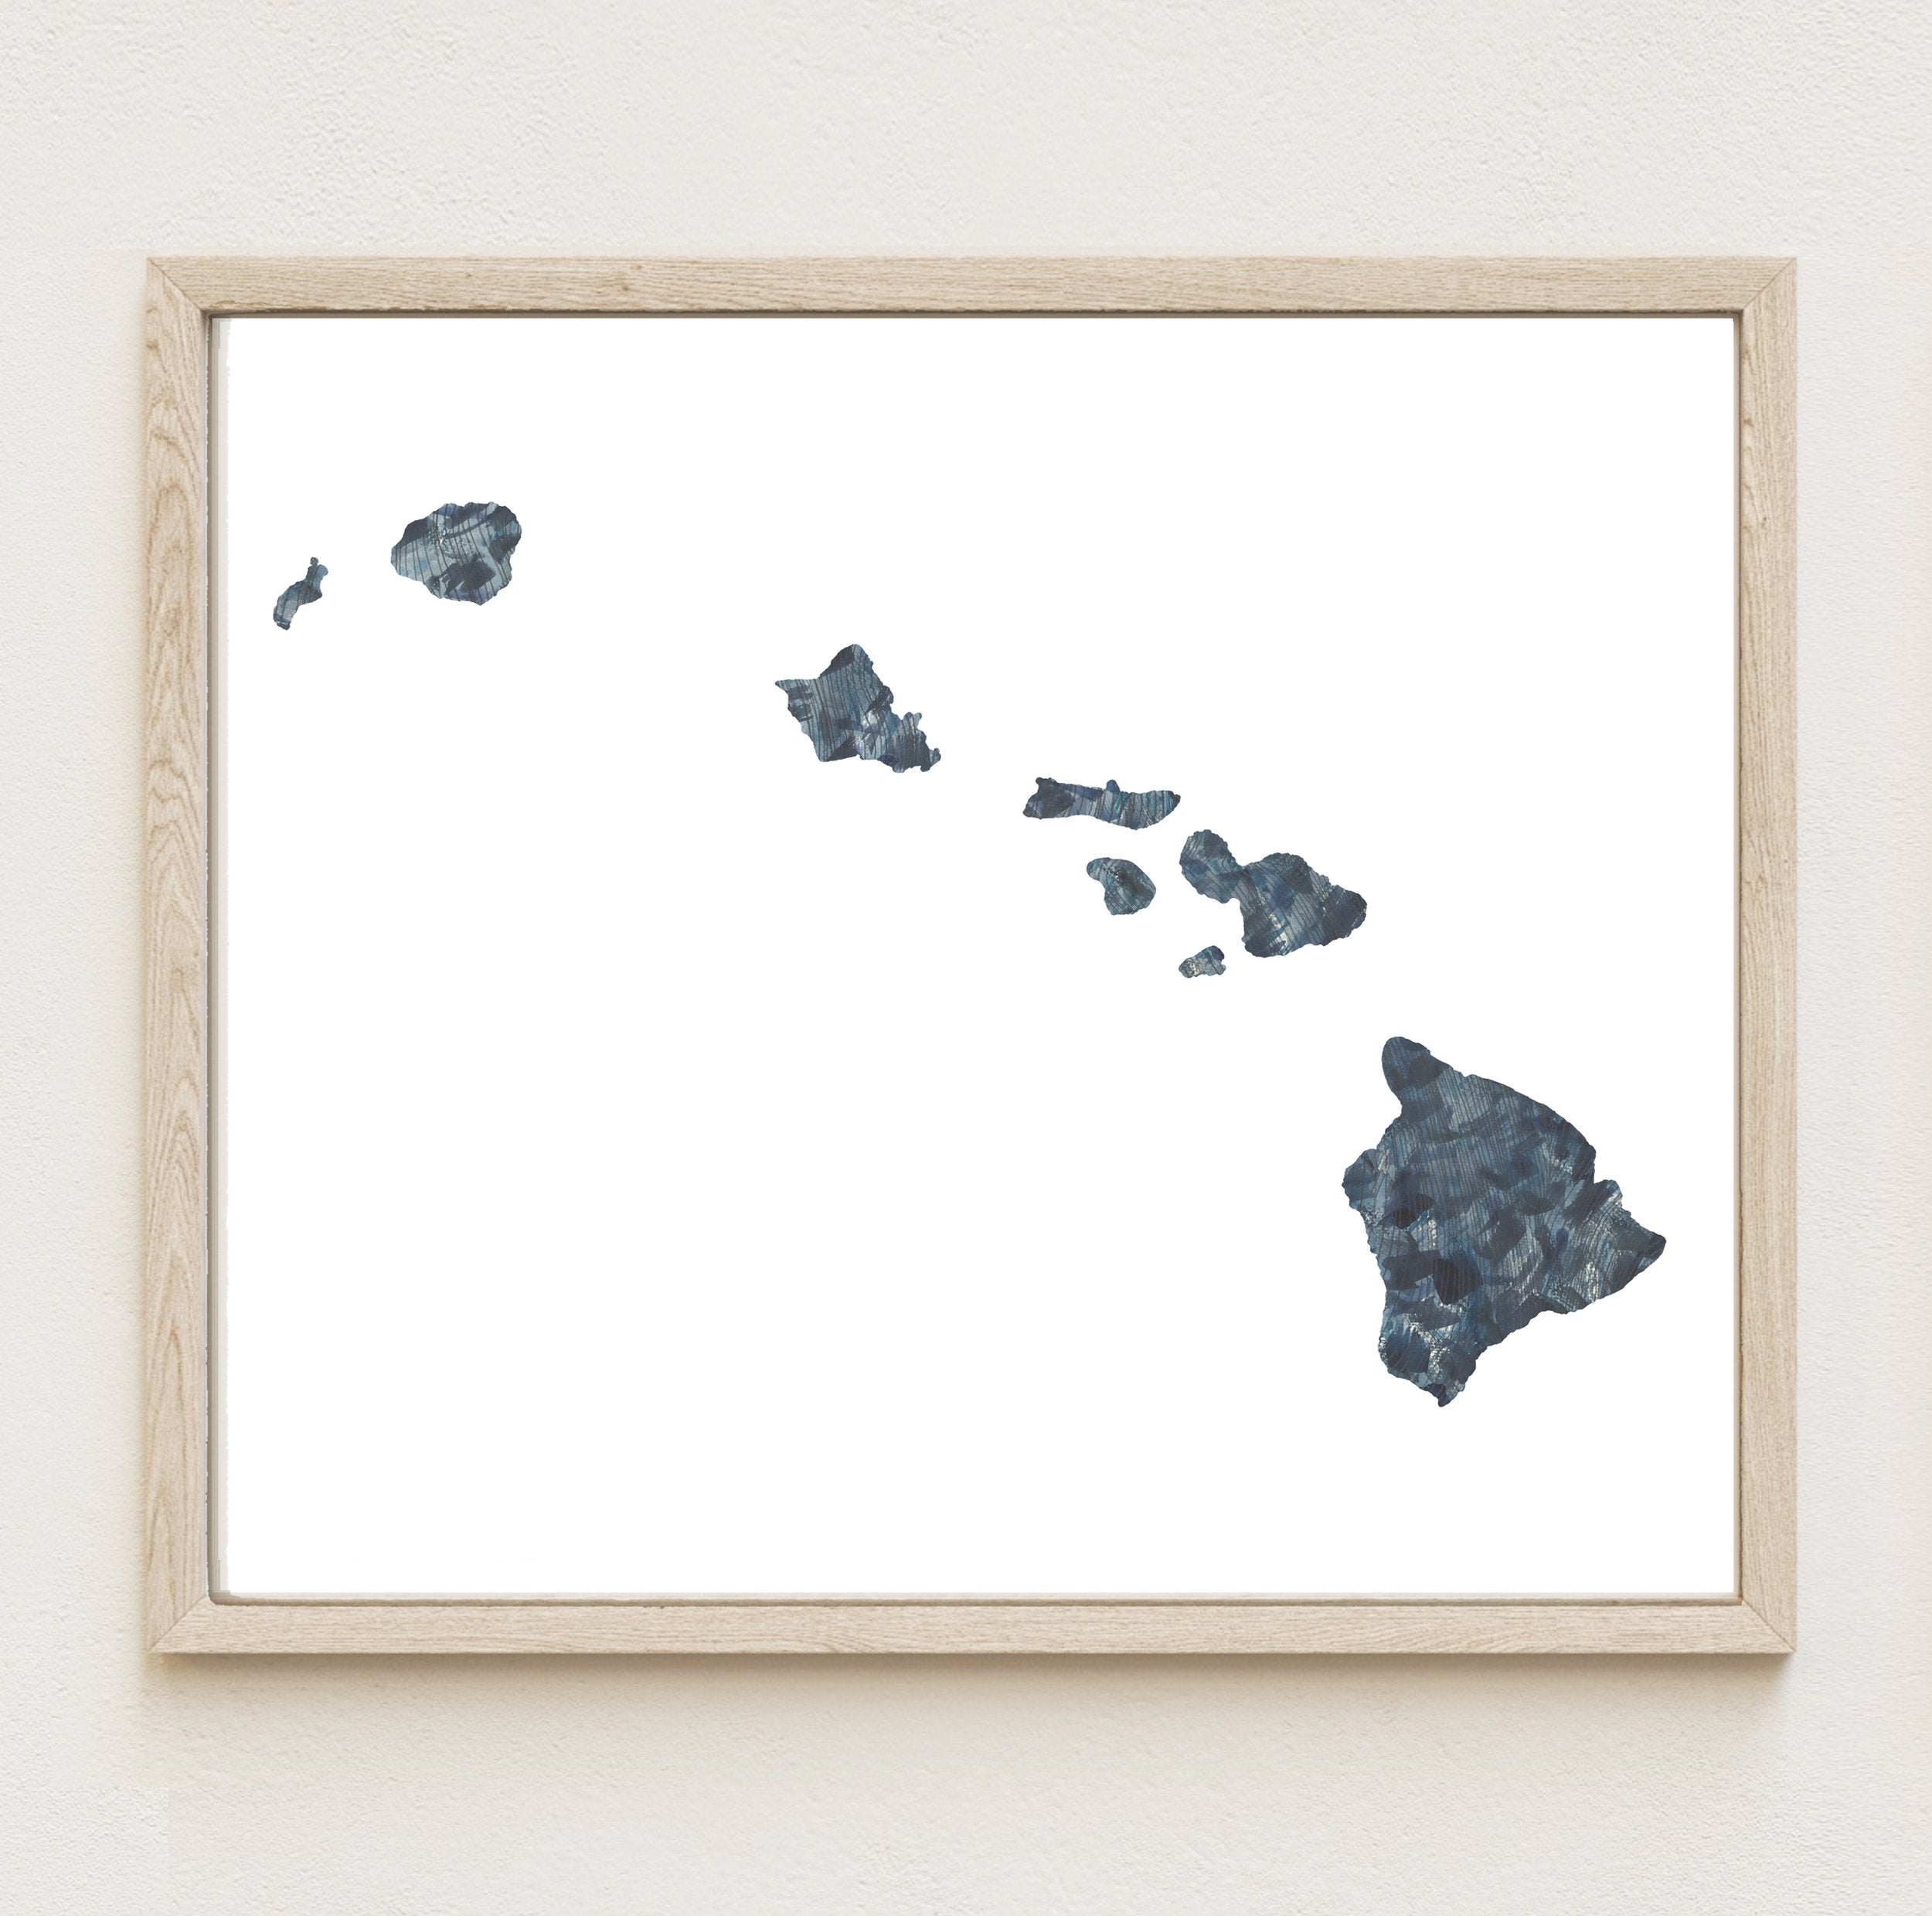 HAWAII State Map: PRINT